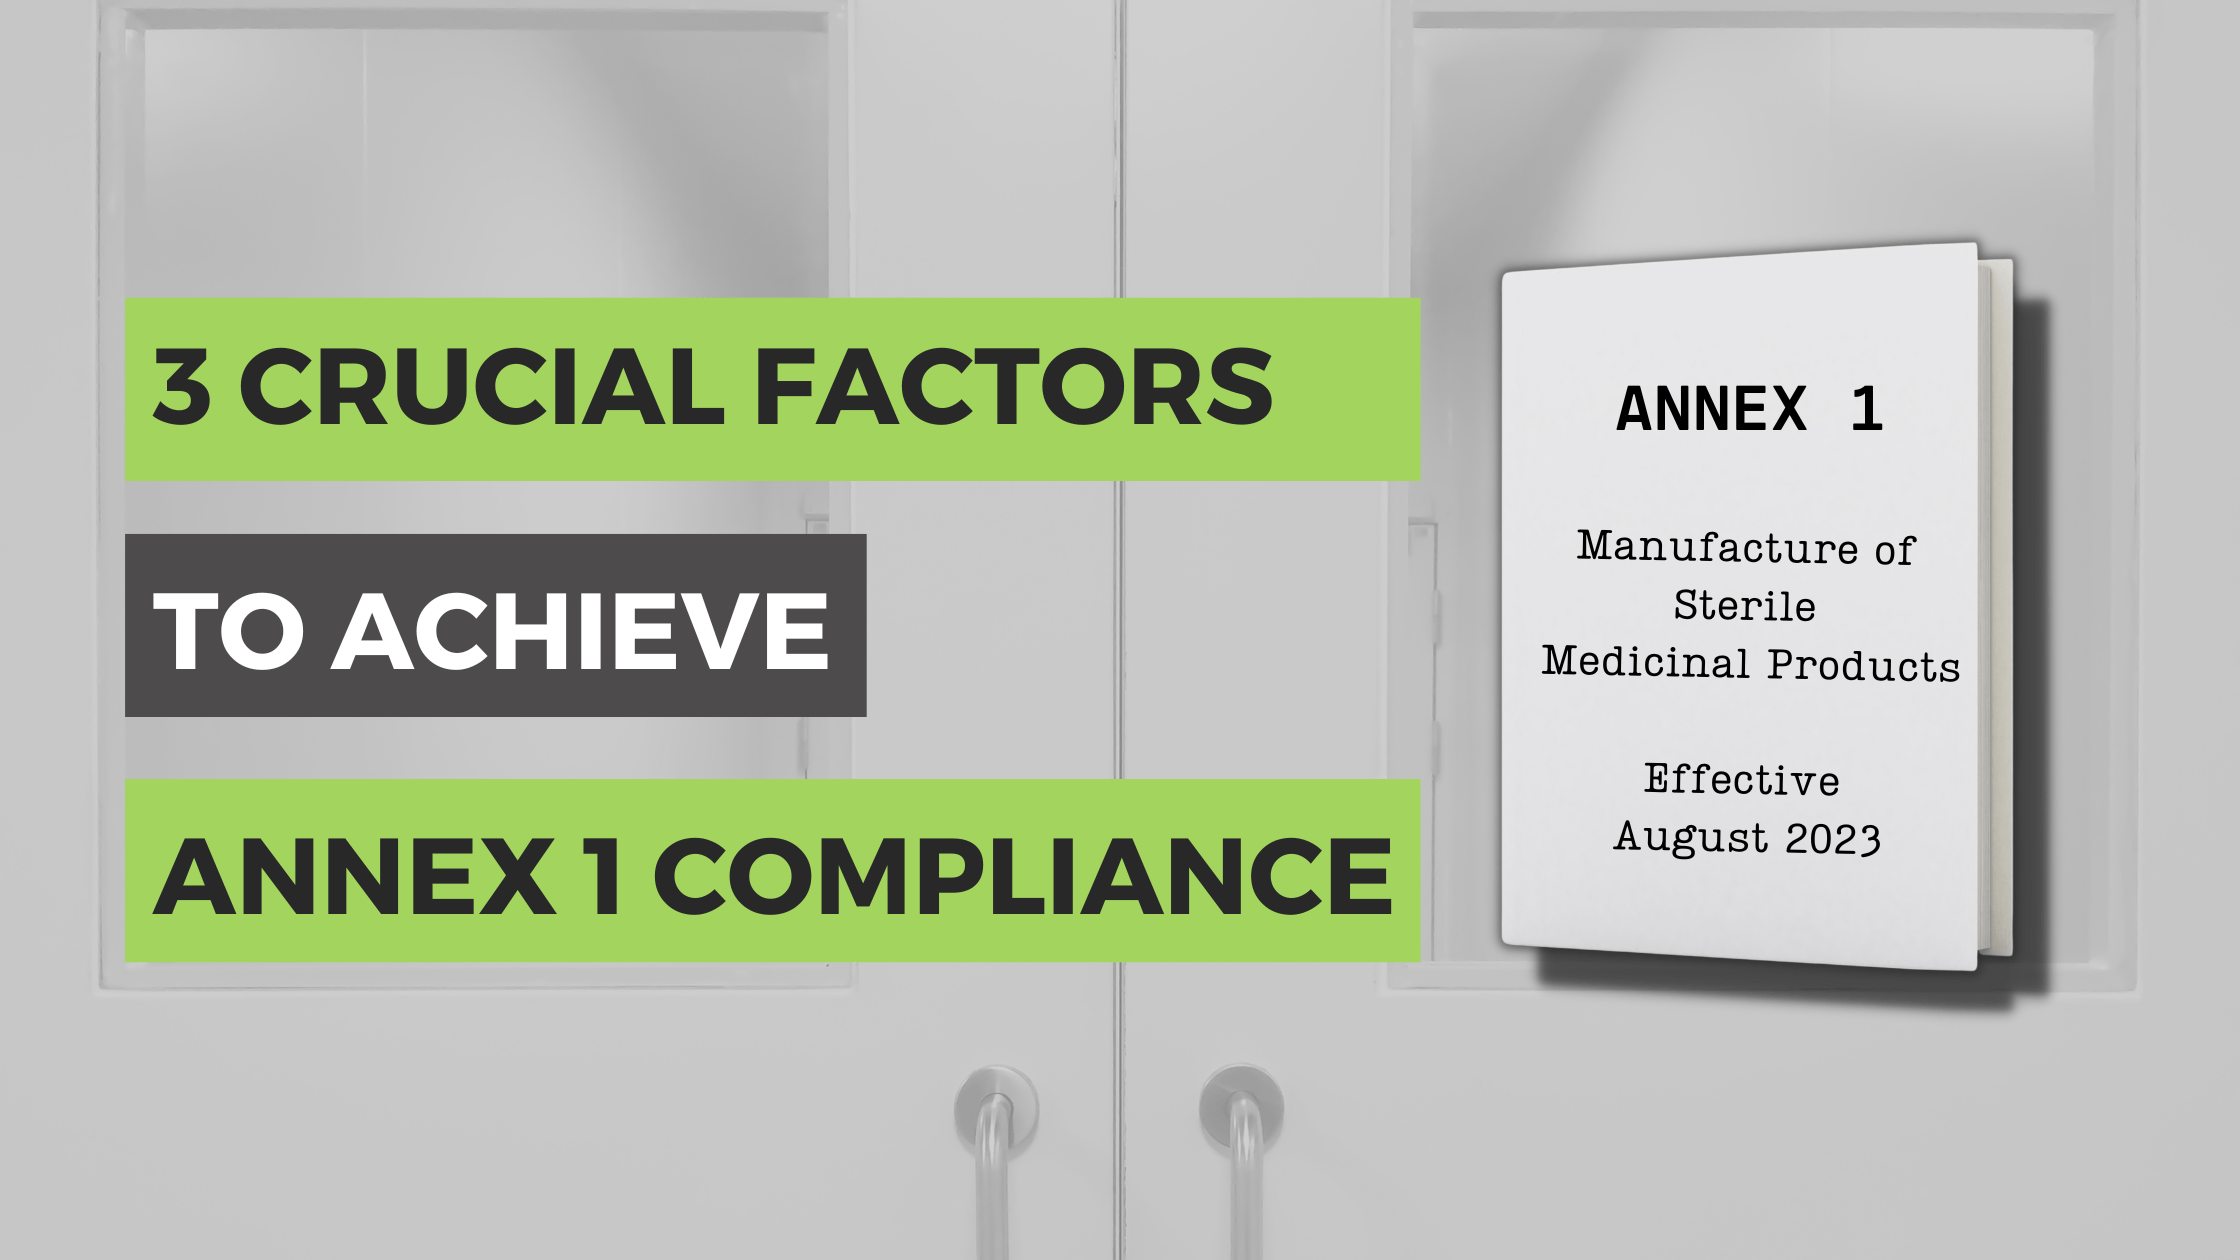 3 Crucial Factors to Achieve Annex 1 Compliance